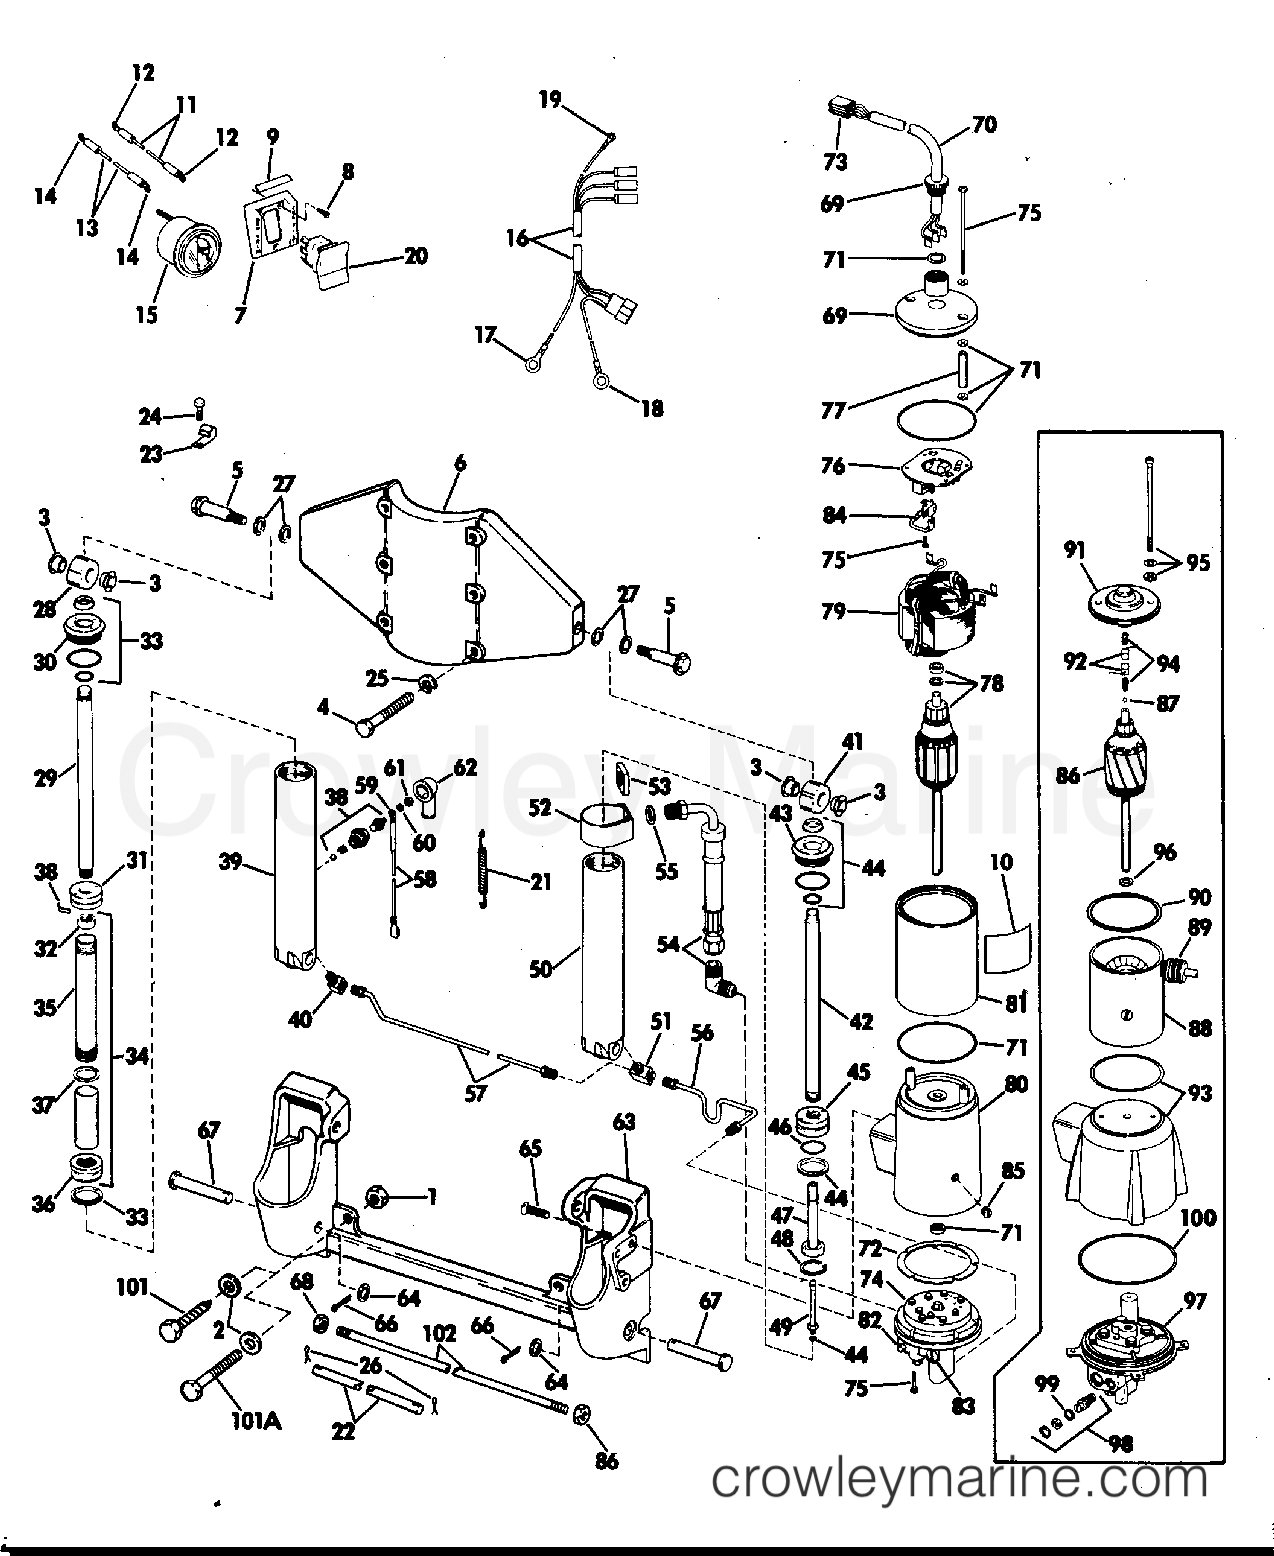 Mercury Tilt Trim Wiring Diagram | Wiring Library - Mercury Outboard Power Trim Wiring Diagram